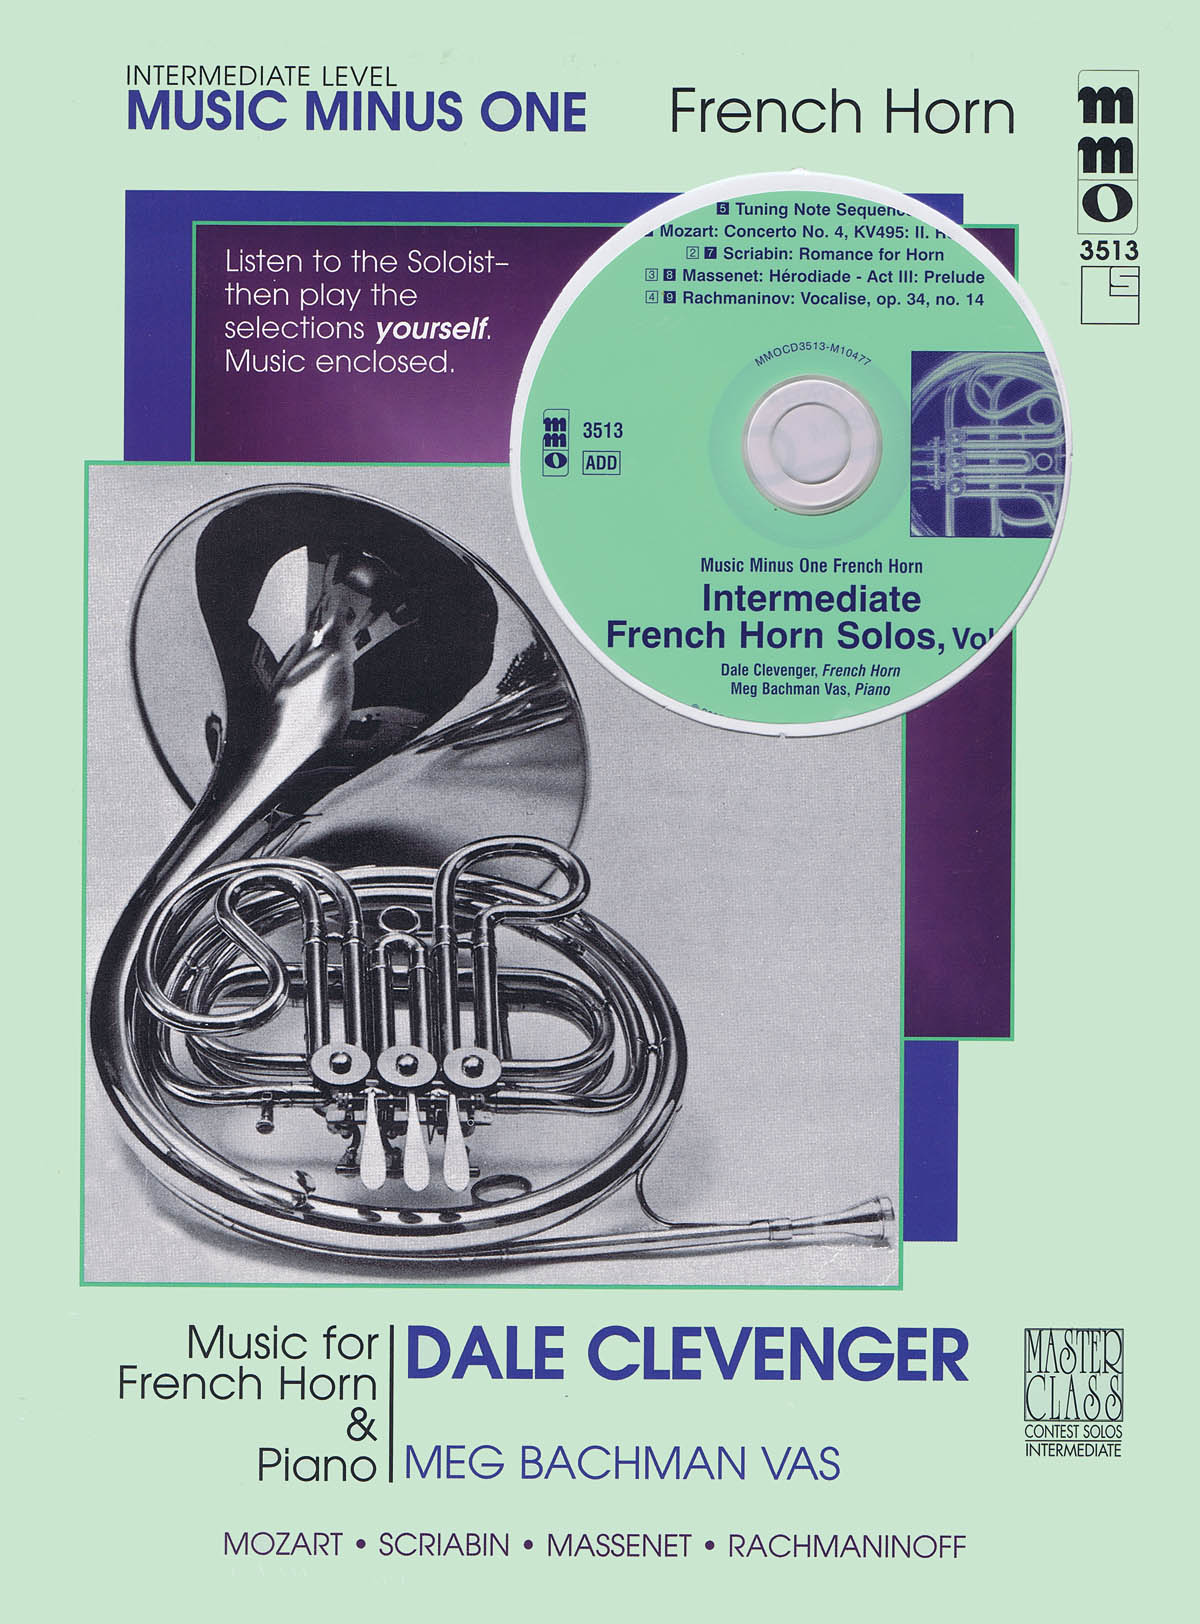 Intermediate French Horn Solos - Volume I